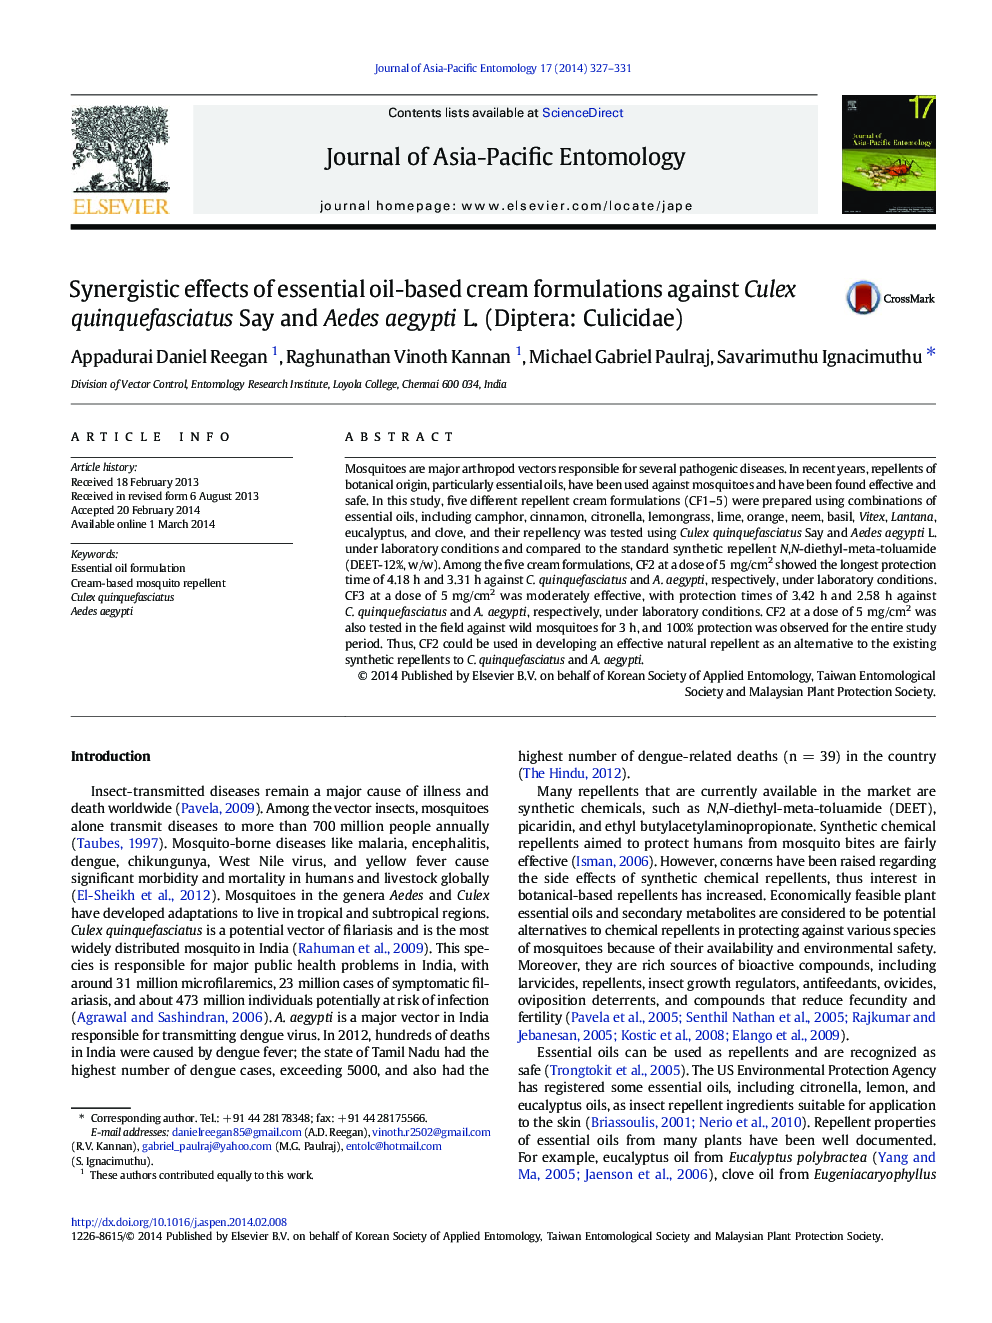 Synergistic effects of essential oil-based cream formulations against Culex quinquefasciatus Say and Aedes aegypti L. (Diptera: Culicidae)